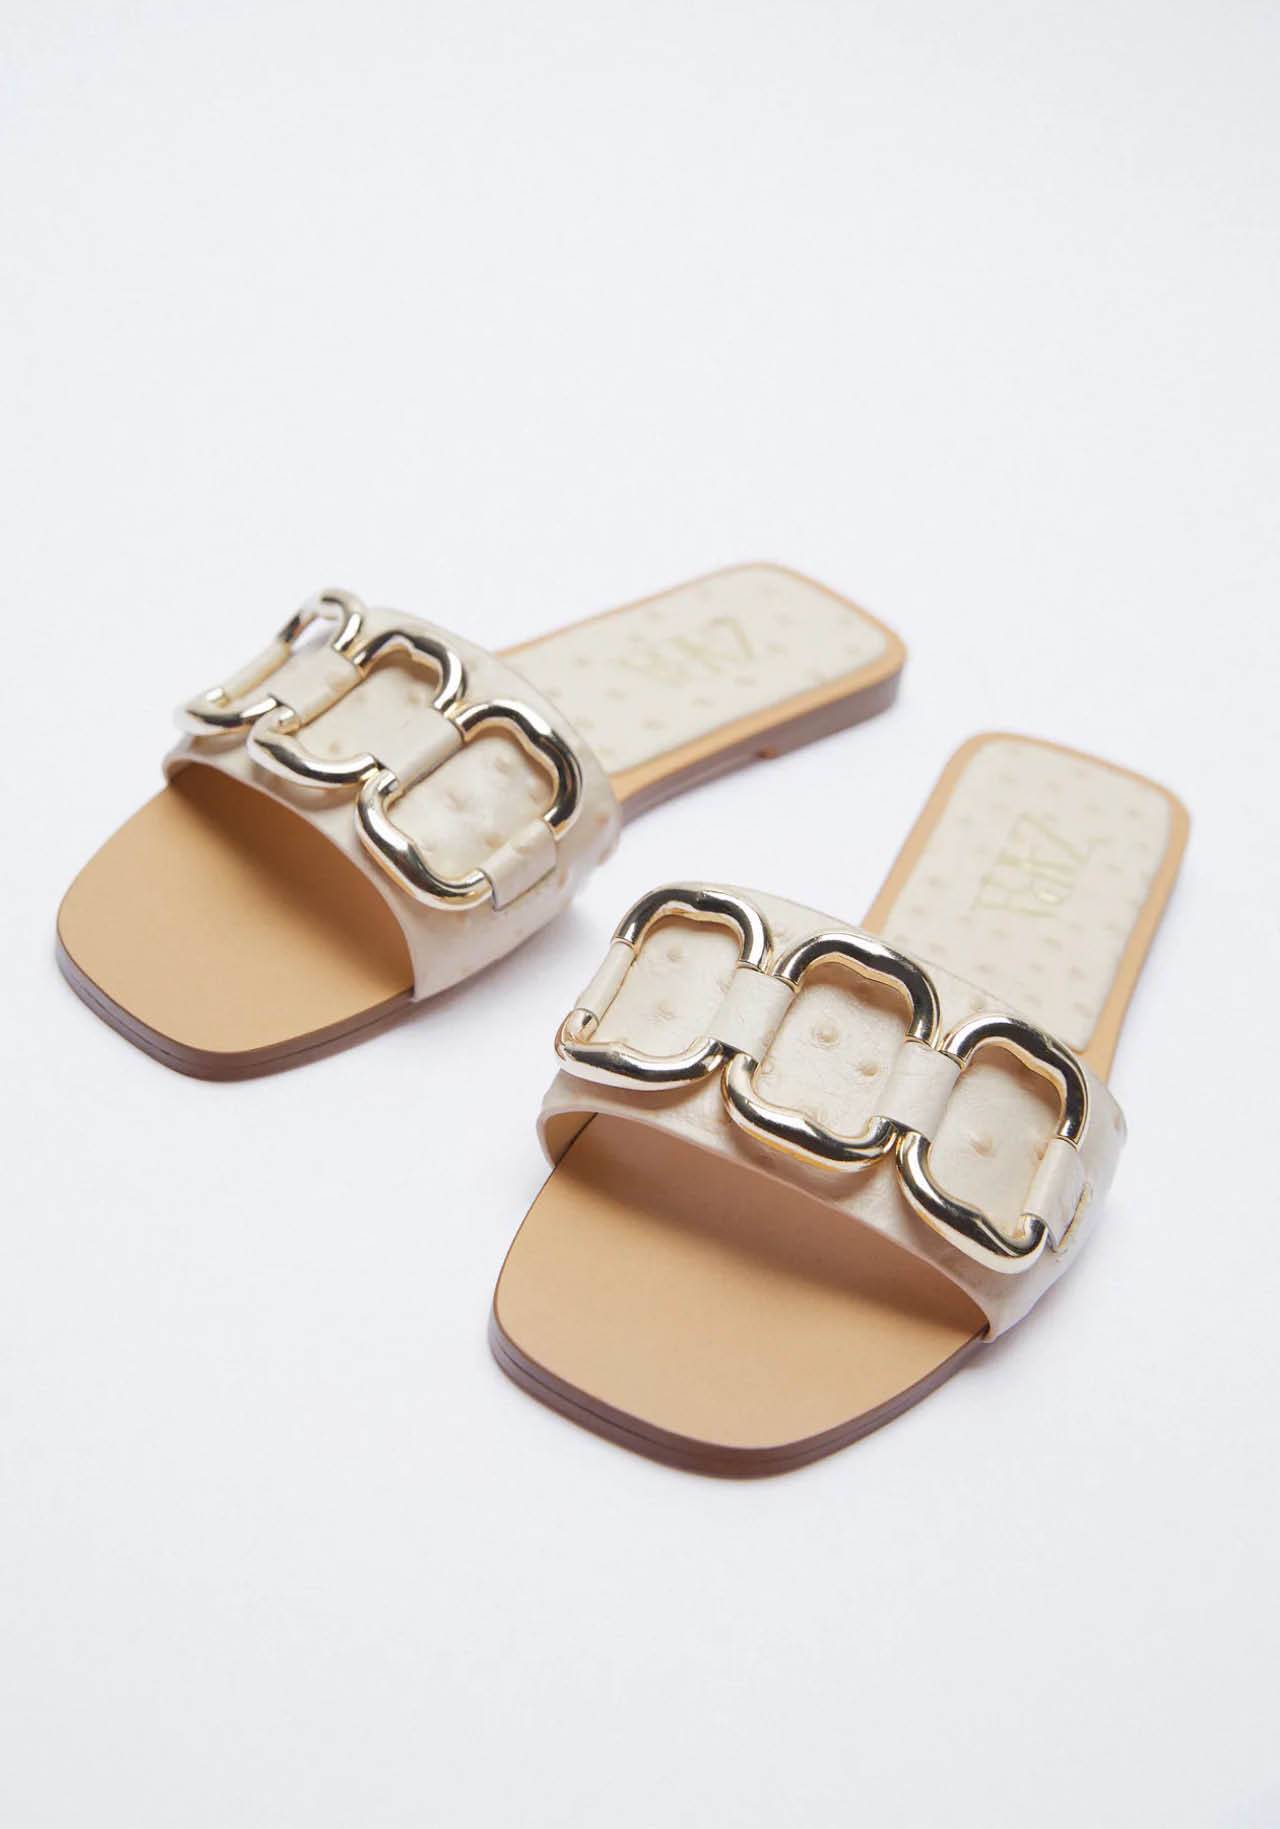 Sandalias con eslabones de Zara